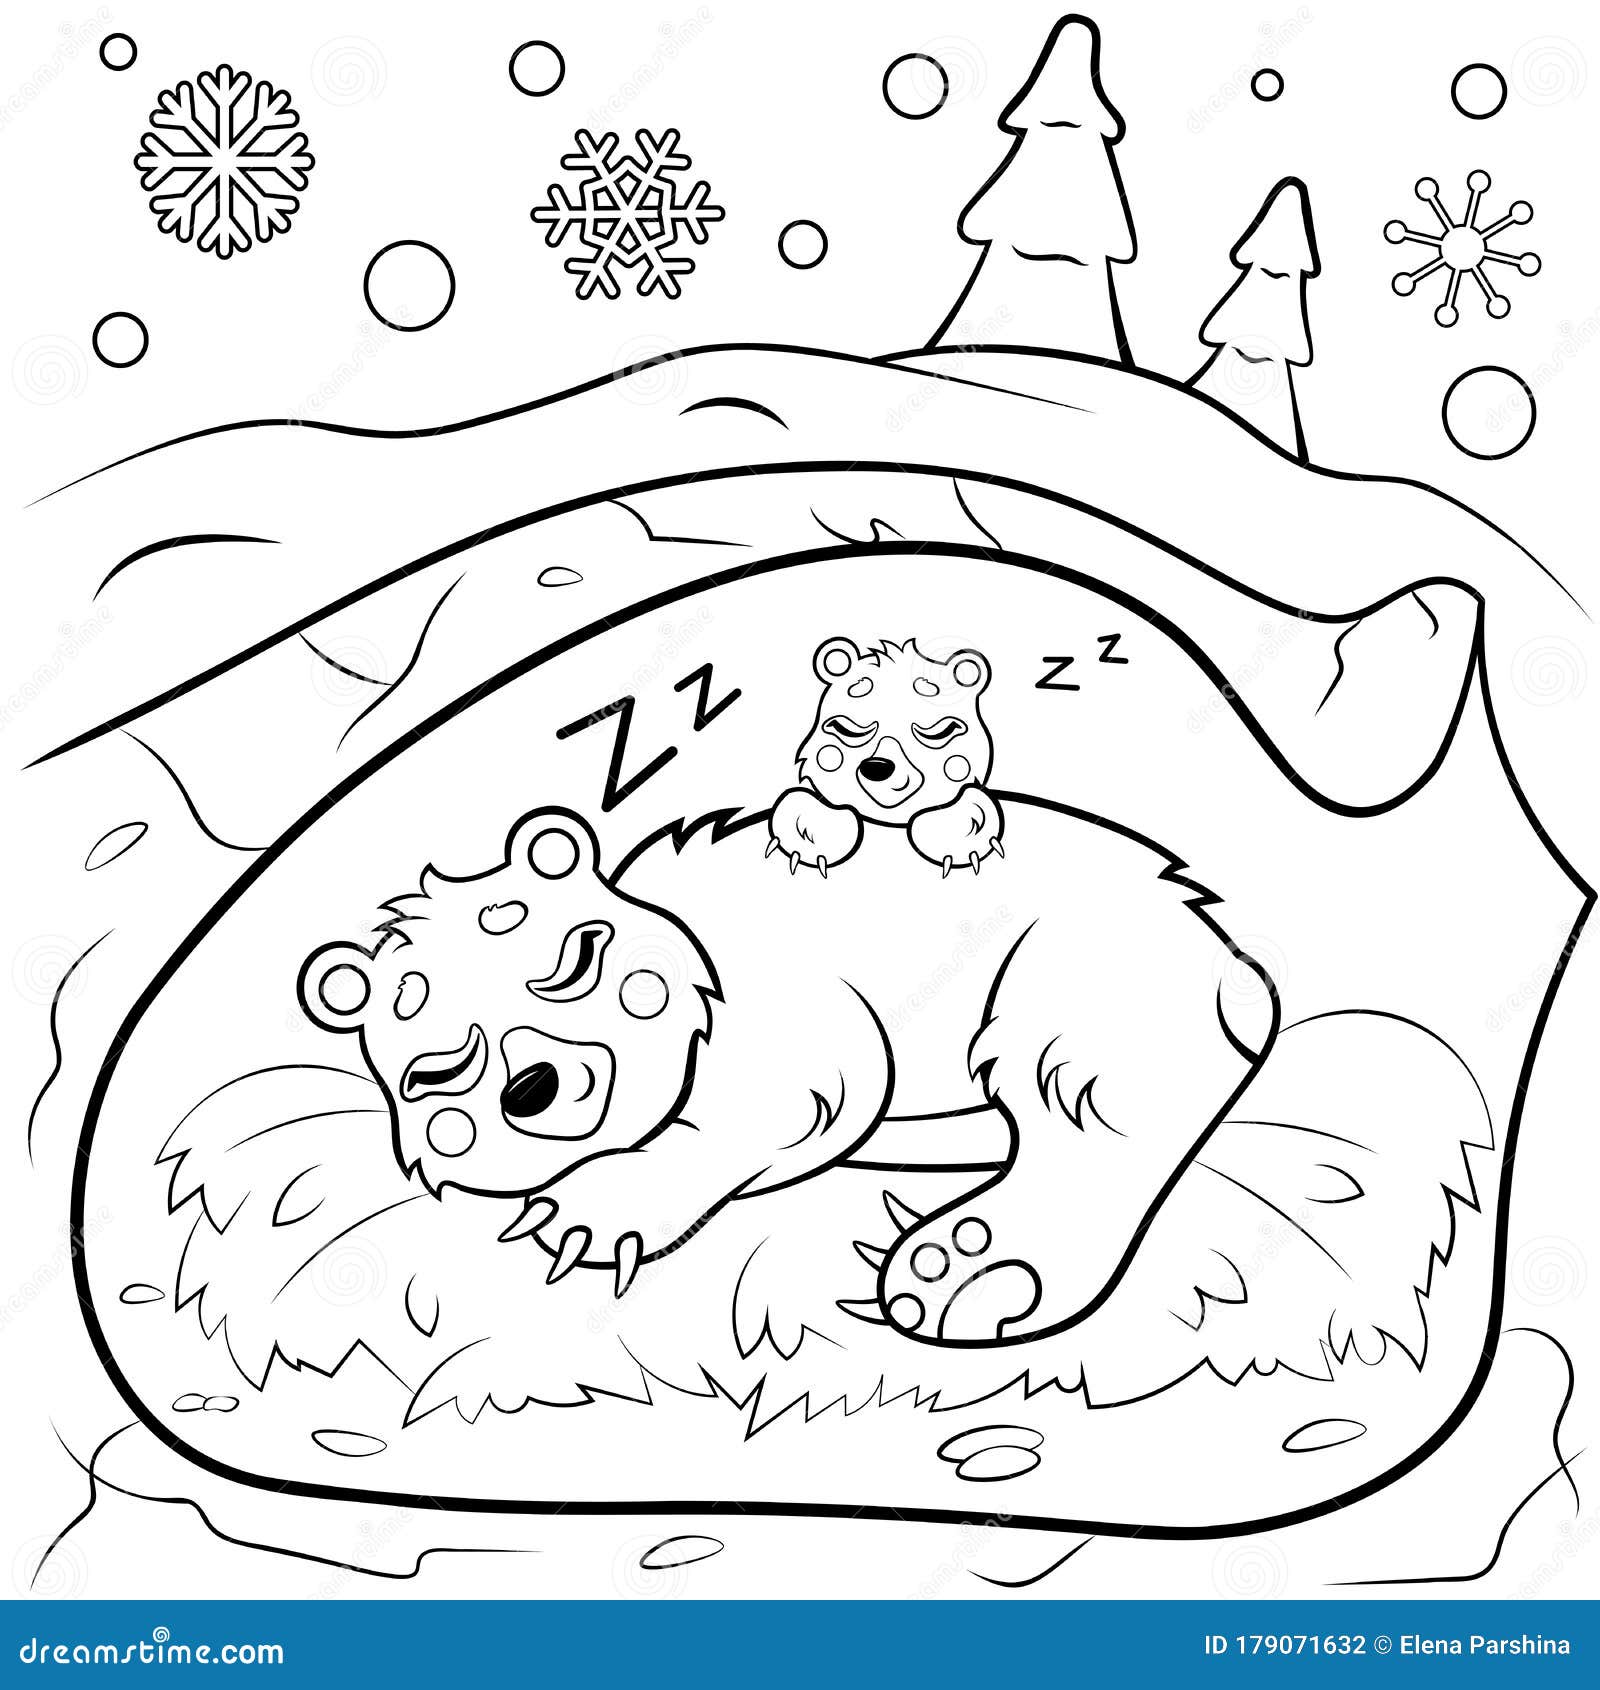 Cute Cartoon Sleeping Bears in Den in Winter Vector Coloring Page ...